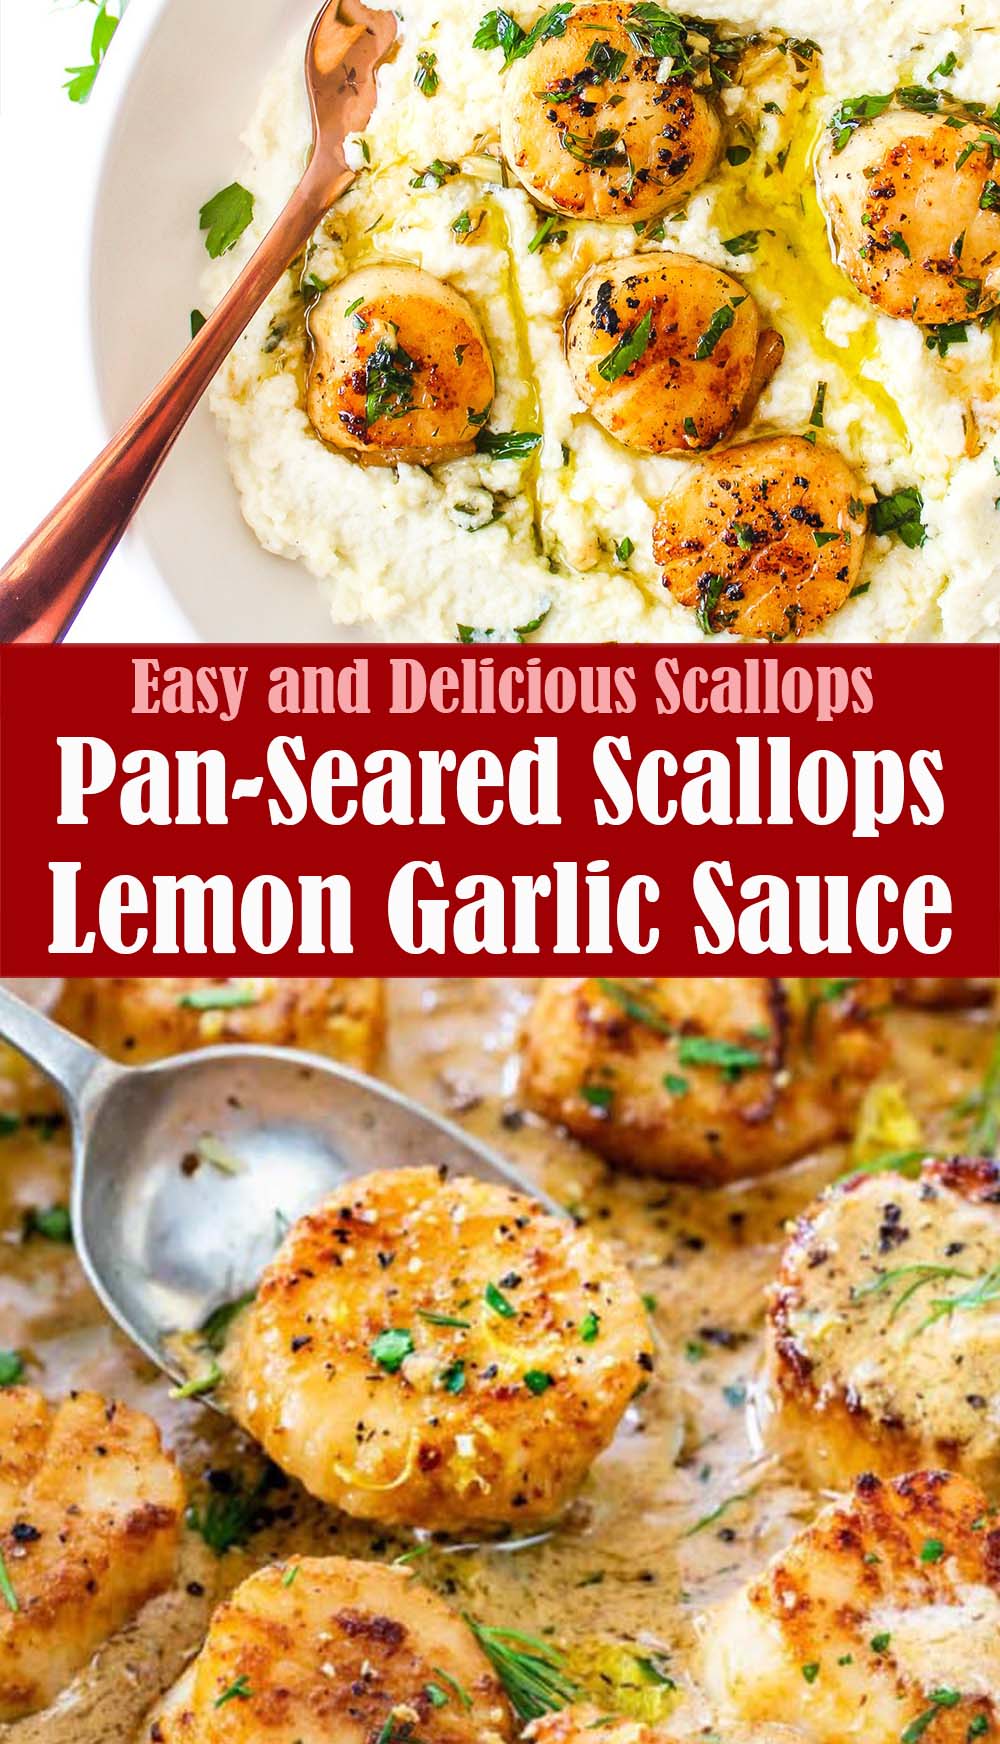 Easy Pan-Seared Scallops with Lemon Garlic Sauce